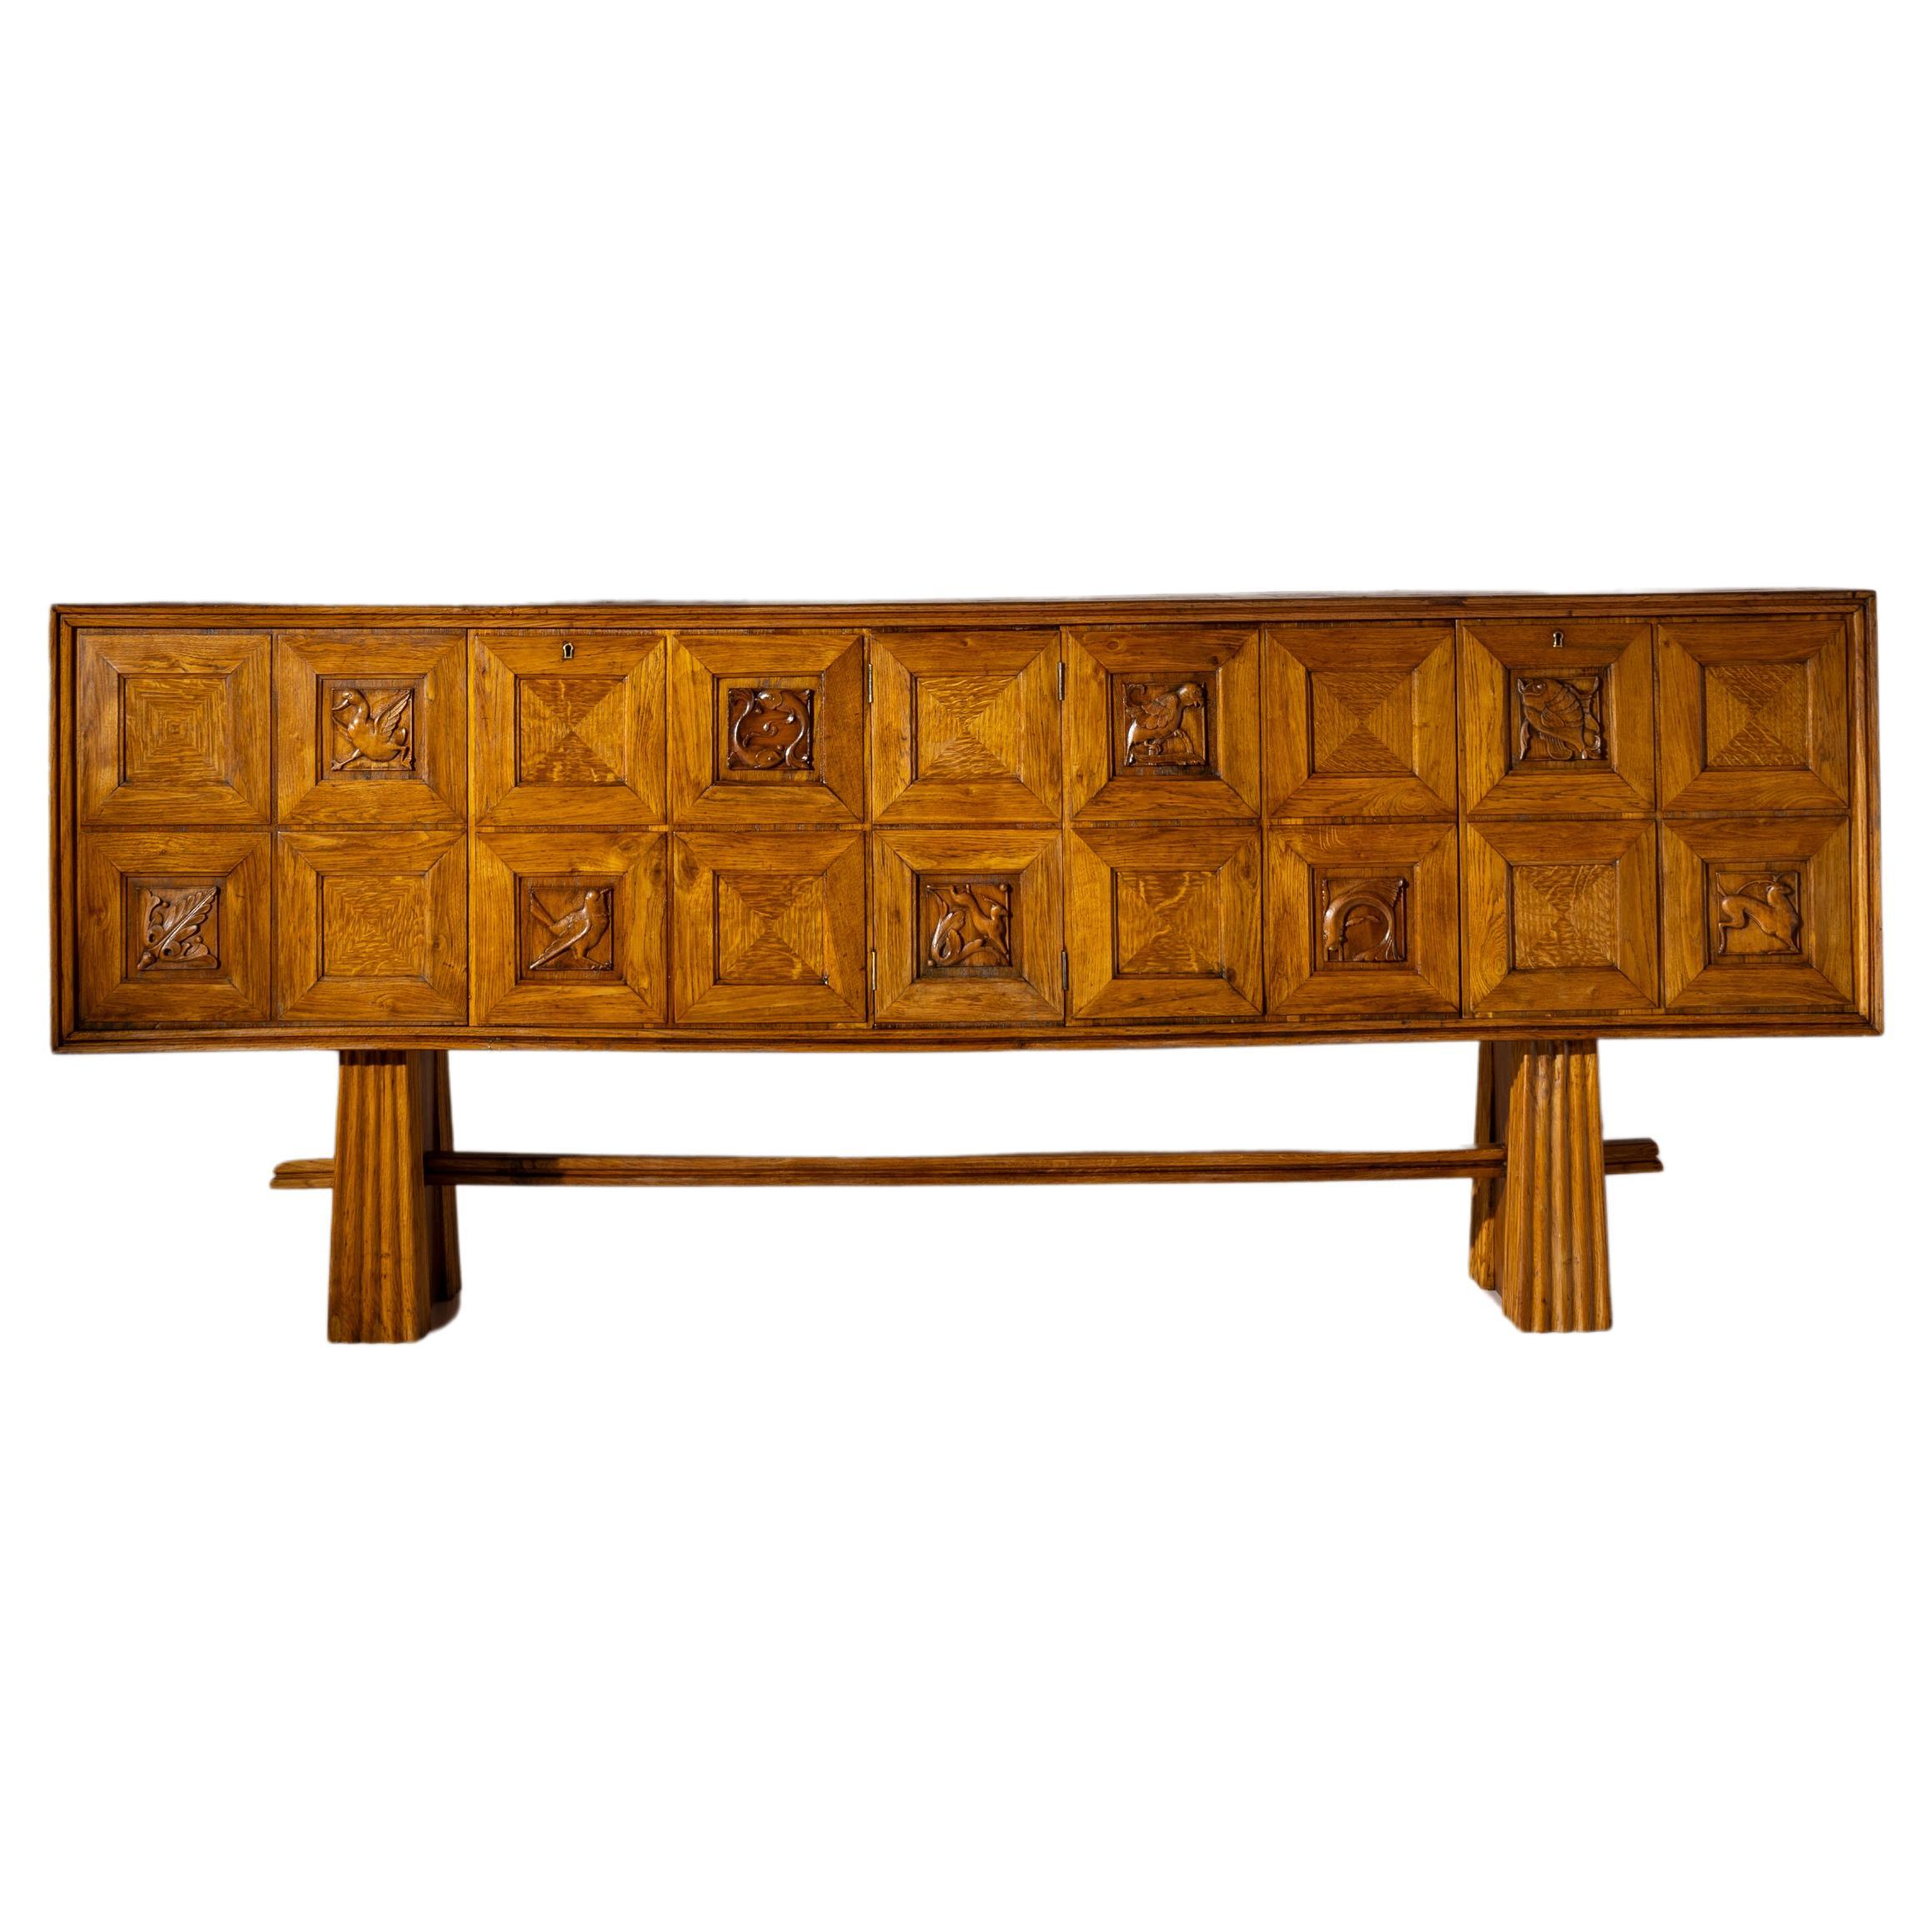 Pier Luigi Colli Oak wood sideboard with carved walnut inlays, Italy, 1940s